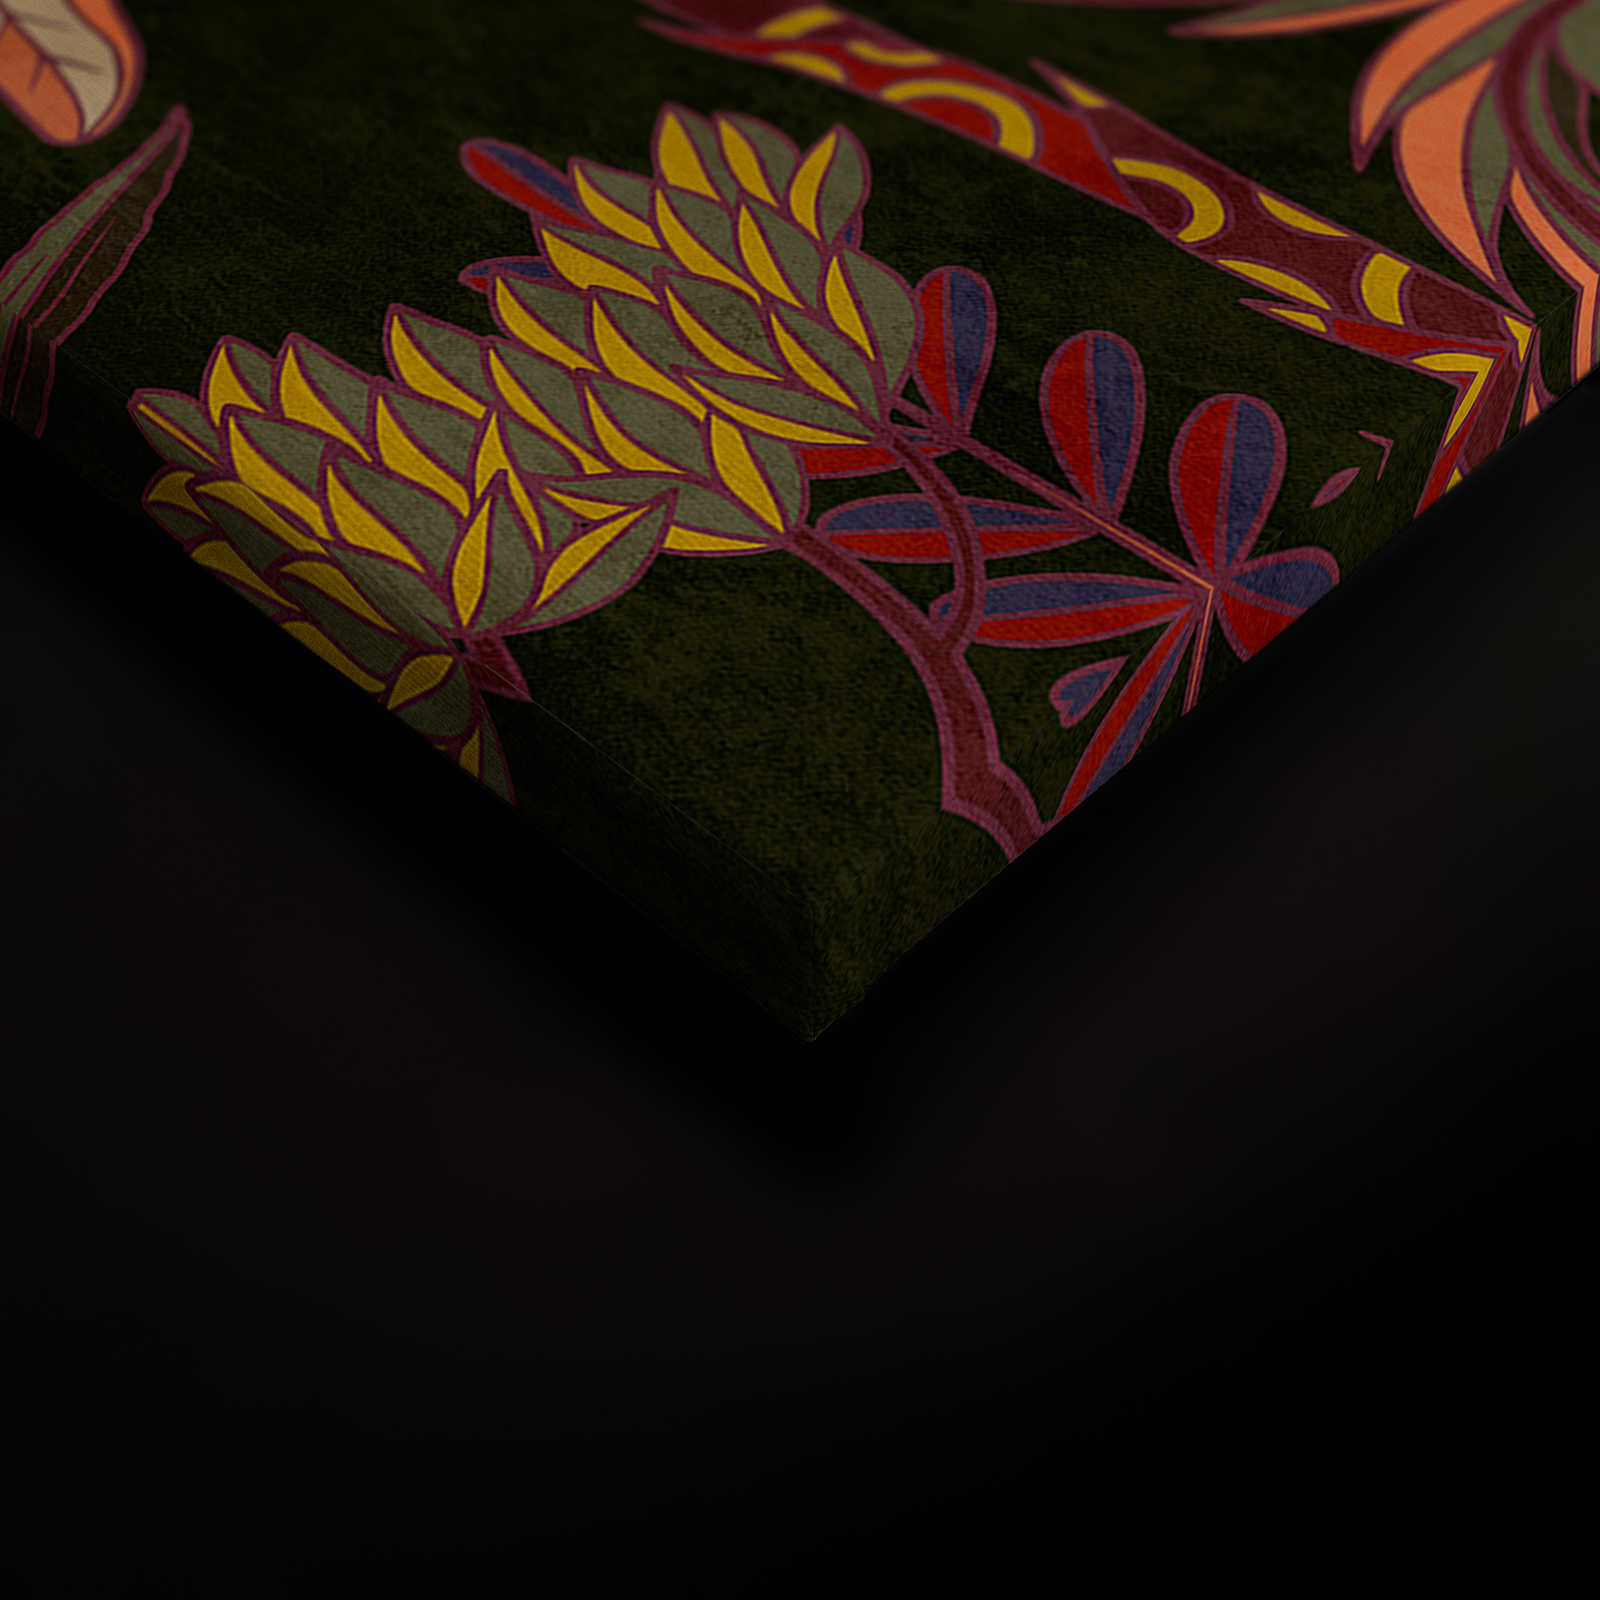             Lagos 1 - Palmen Leinwandbild bunter Grafik Stil im Textillook – 1,20 m x 0,80 m
        